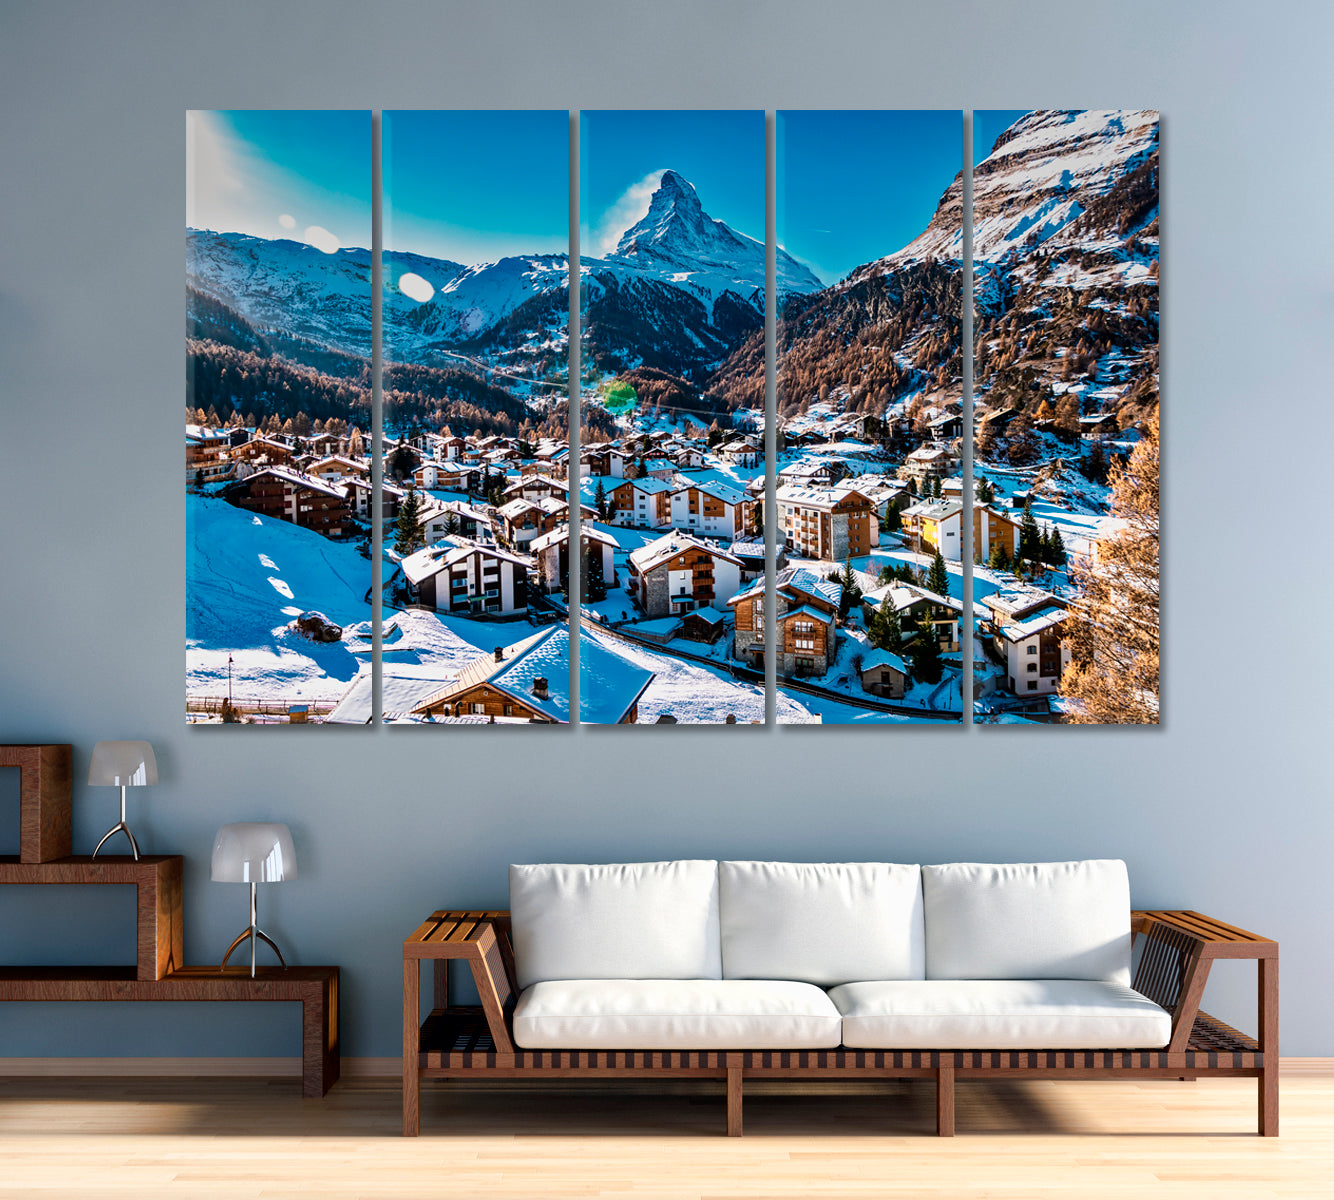 Zermatt Village at Matterhorn Mountain Canvas Print-Canvas Print-CetArt-1 Panel-24x16 inches-CetArt